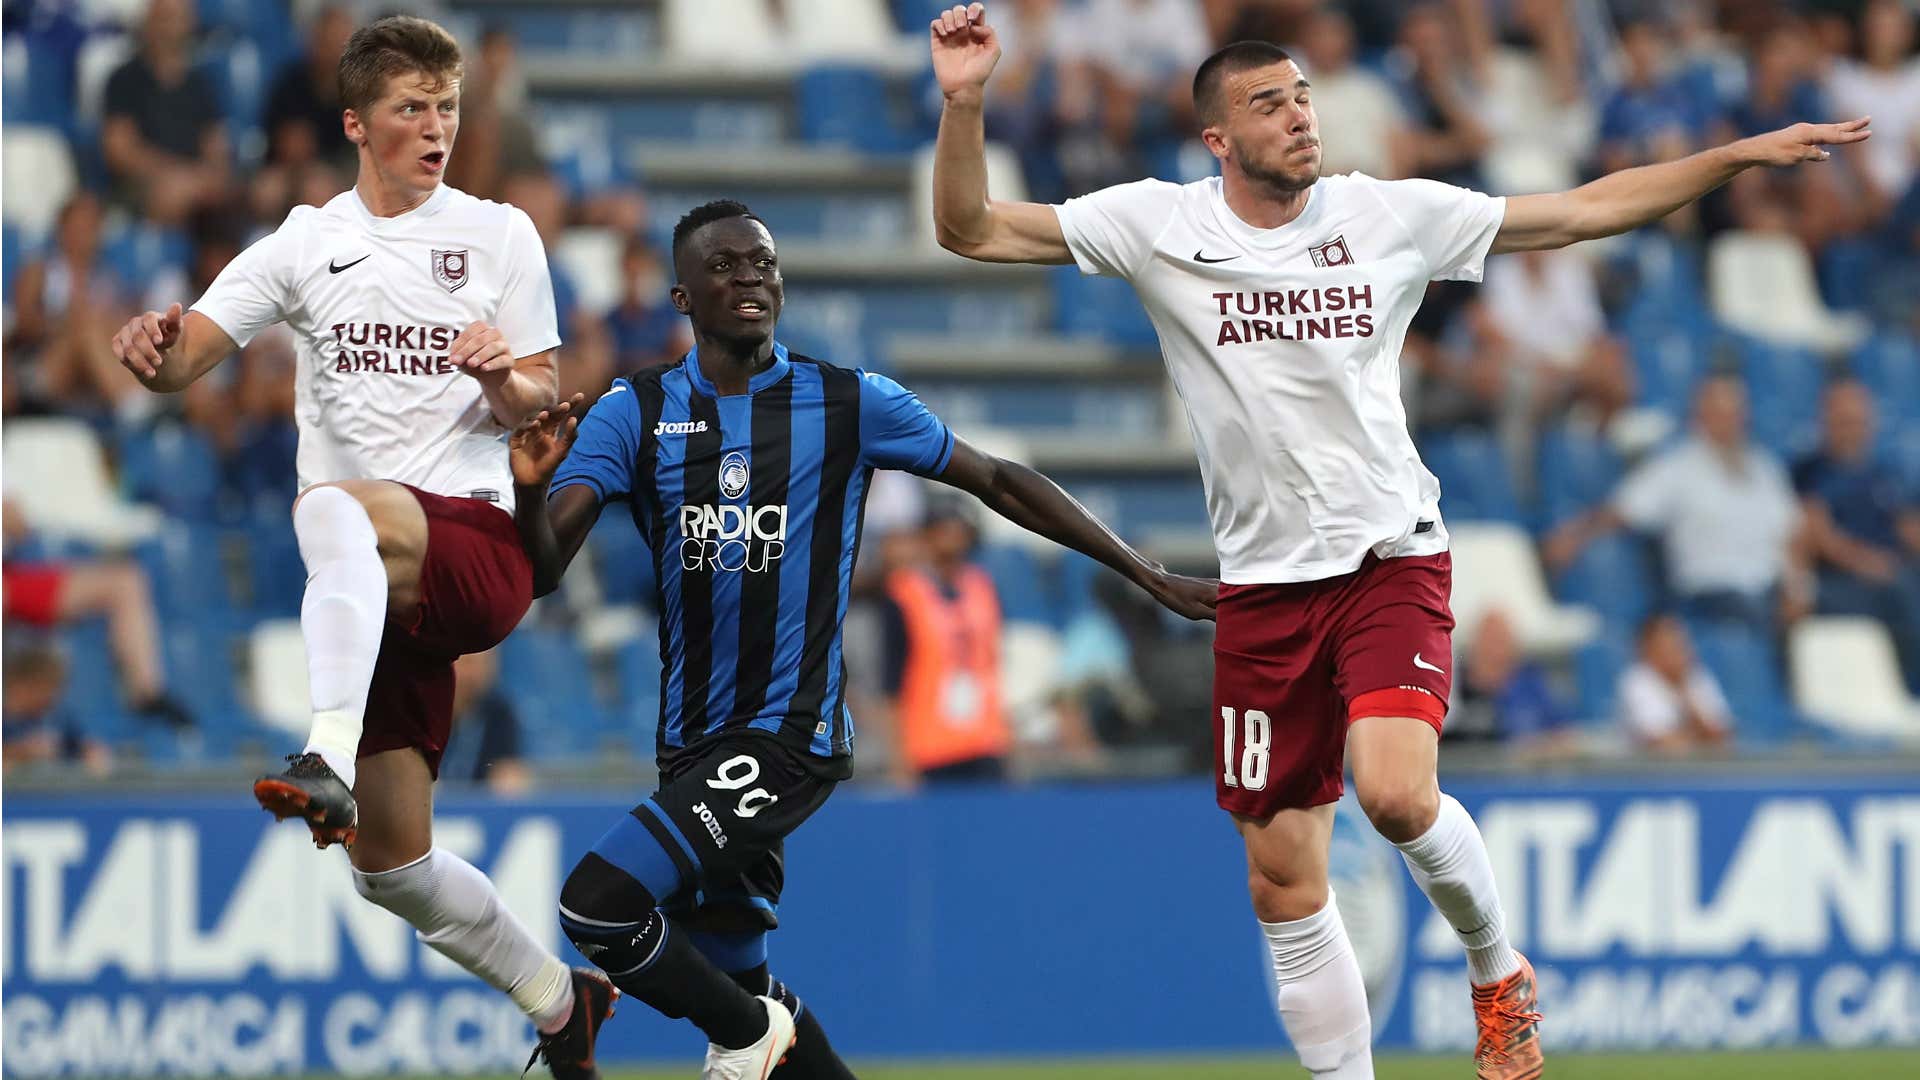 Musa Barrow Nihad Mujakic Semir Pidro Atalanta Sarajevo Europa League Qualifying Round match